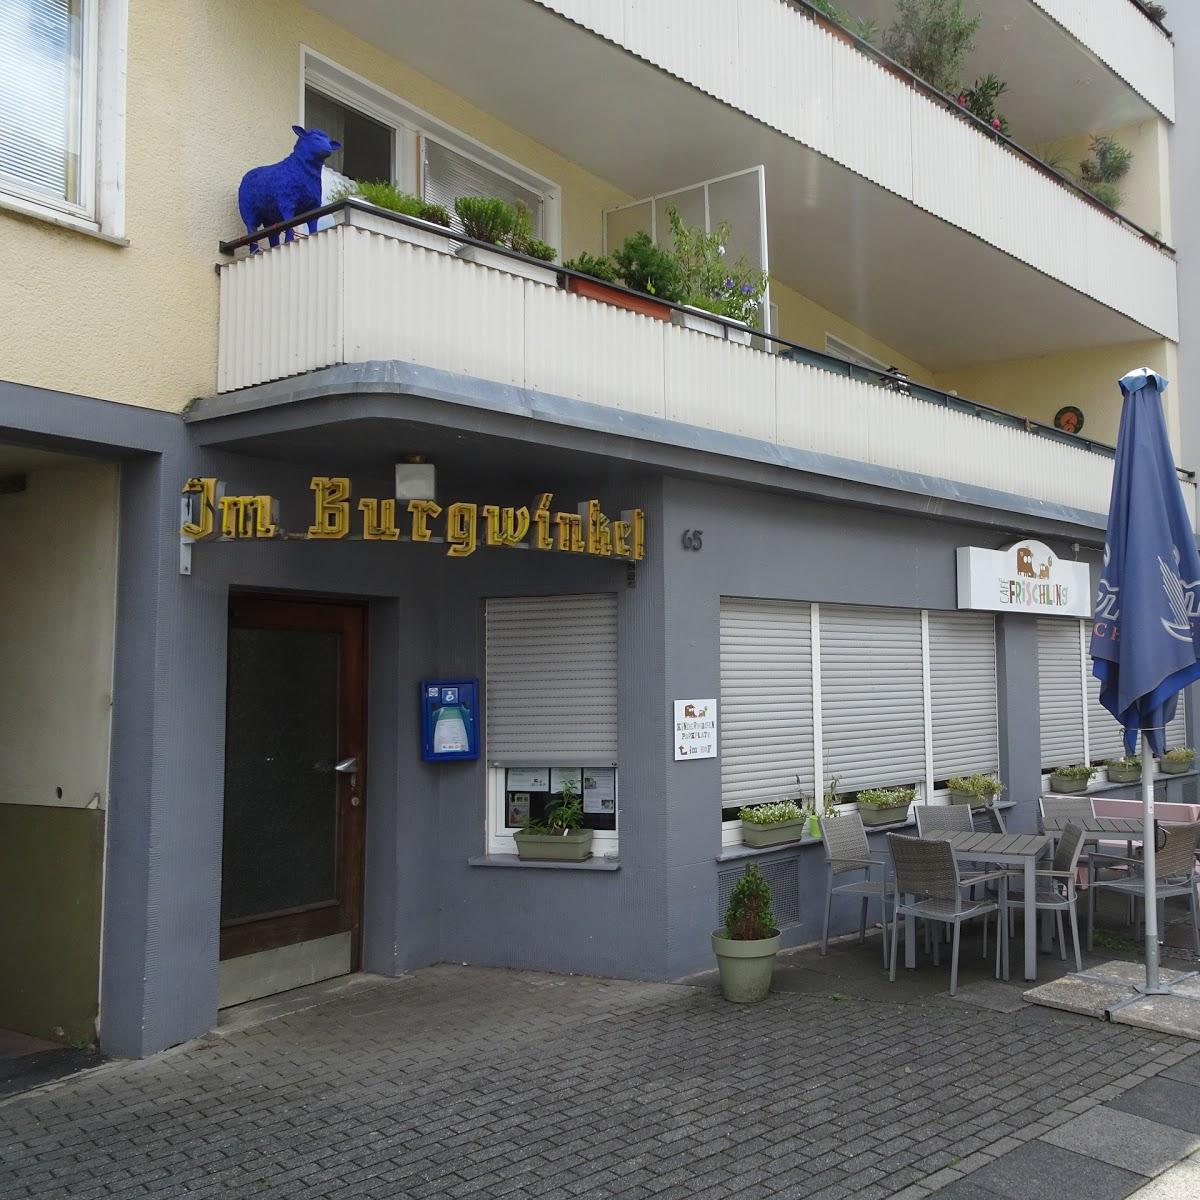 Restaurant "Cafe Frischling" in Bonn